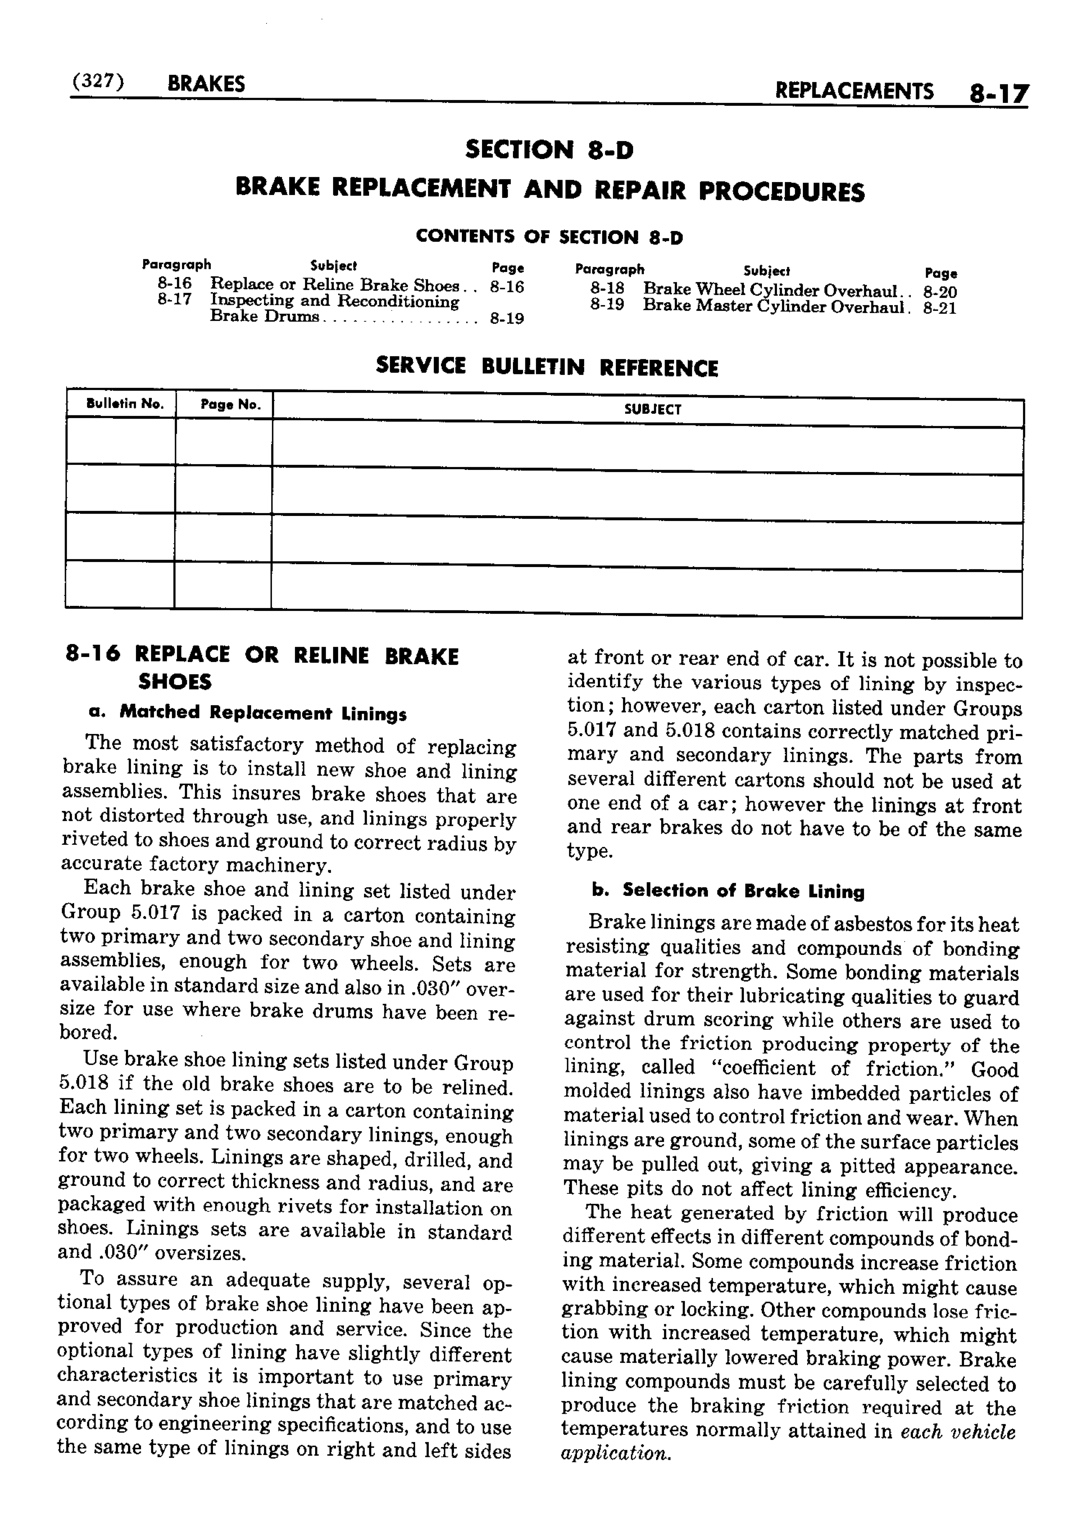 n_09 1952 Buick Shop Manual - Brakes-017-017.jpg